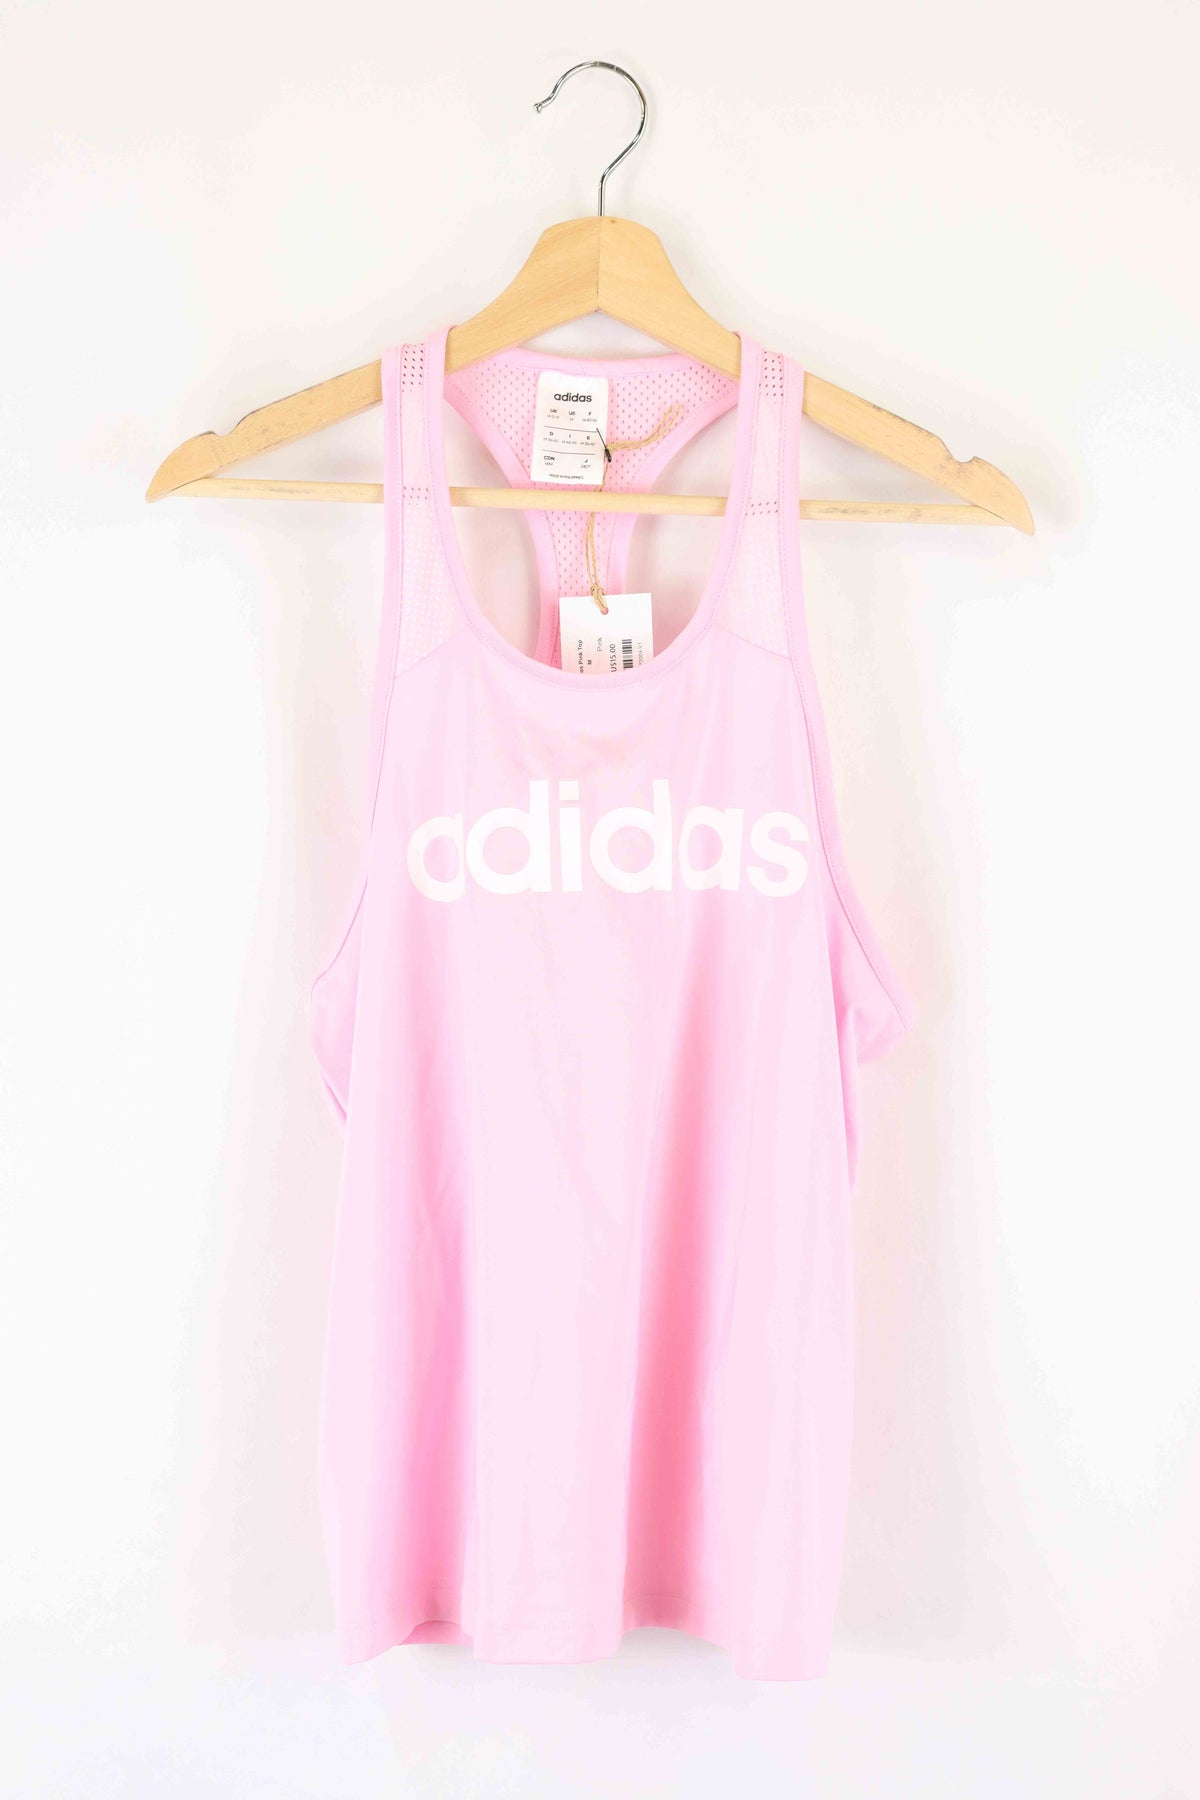 Adidas Pink Top M